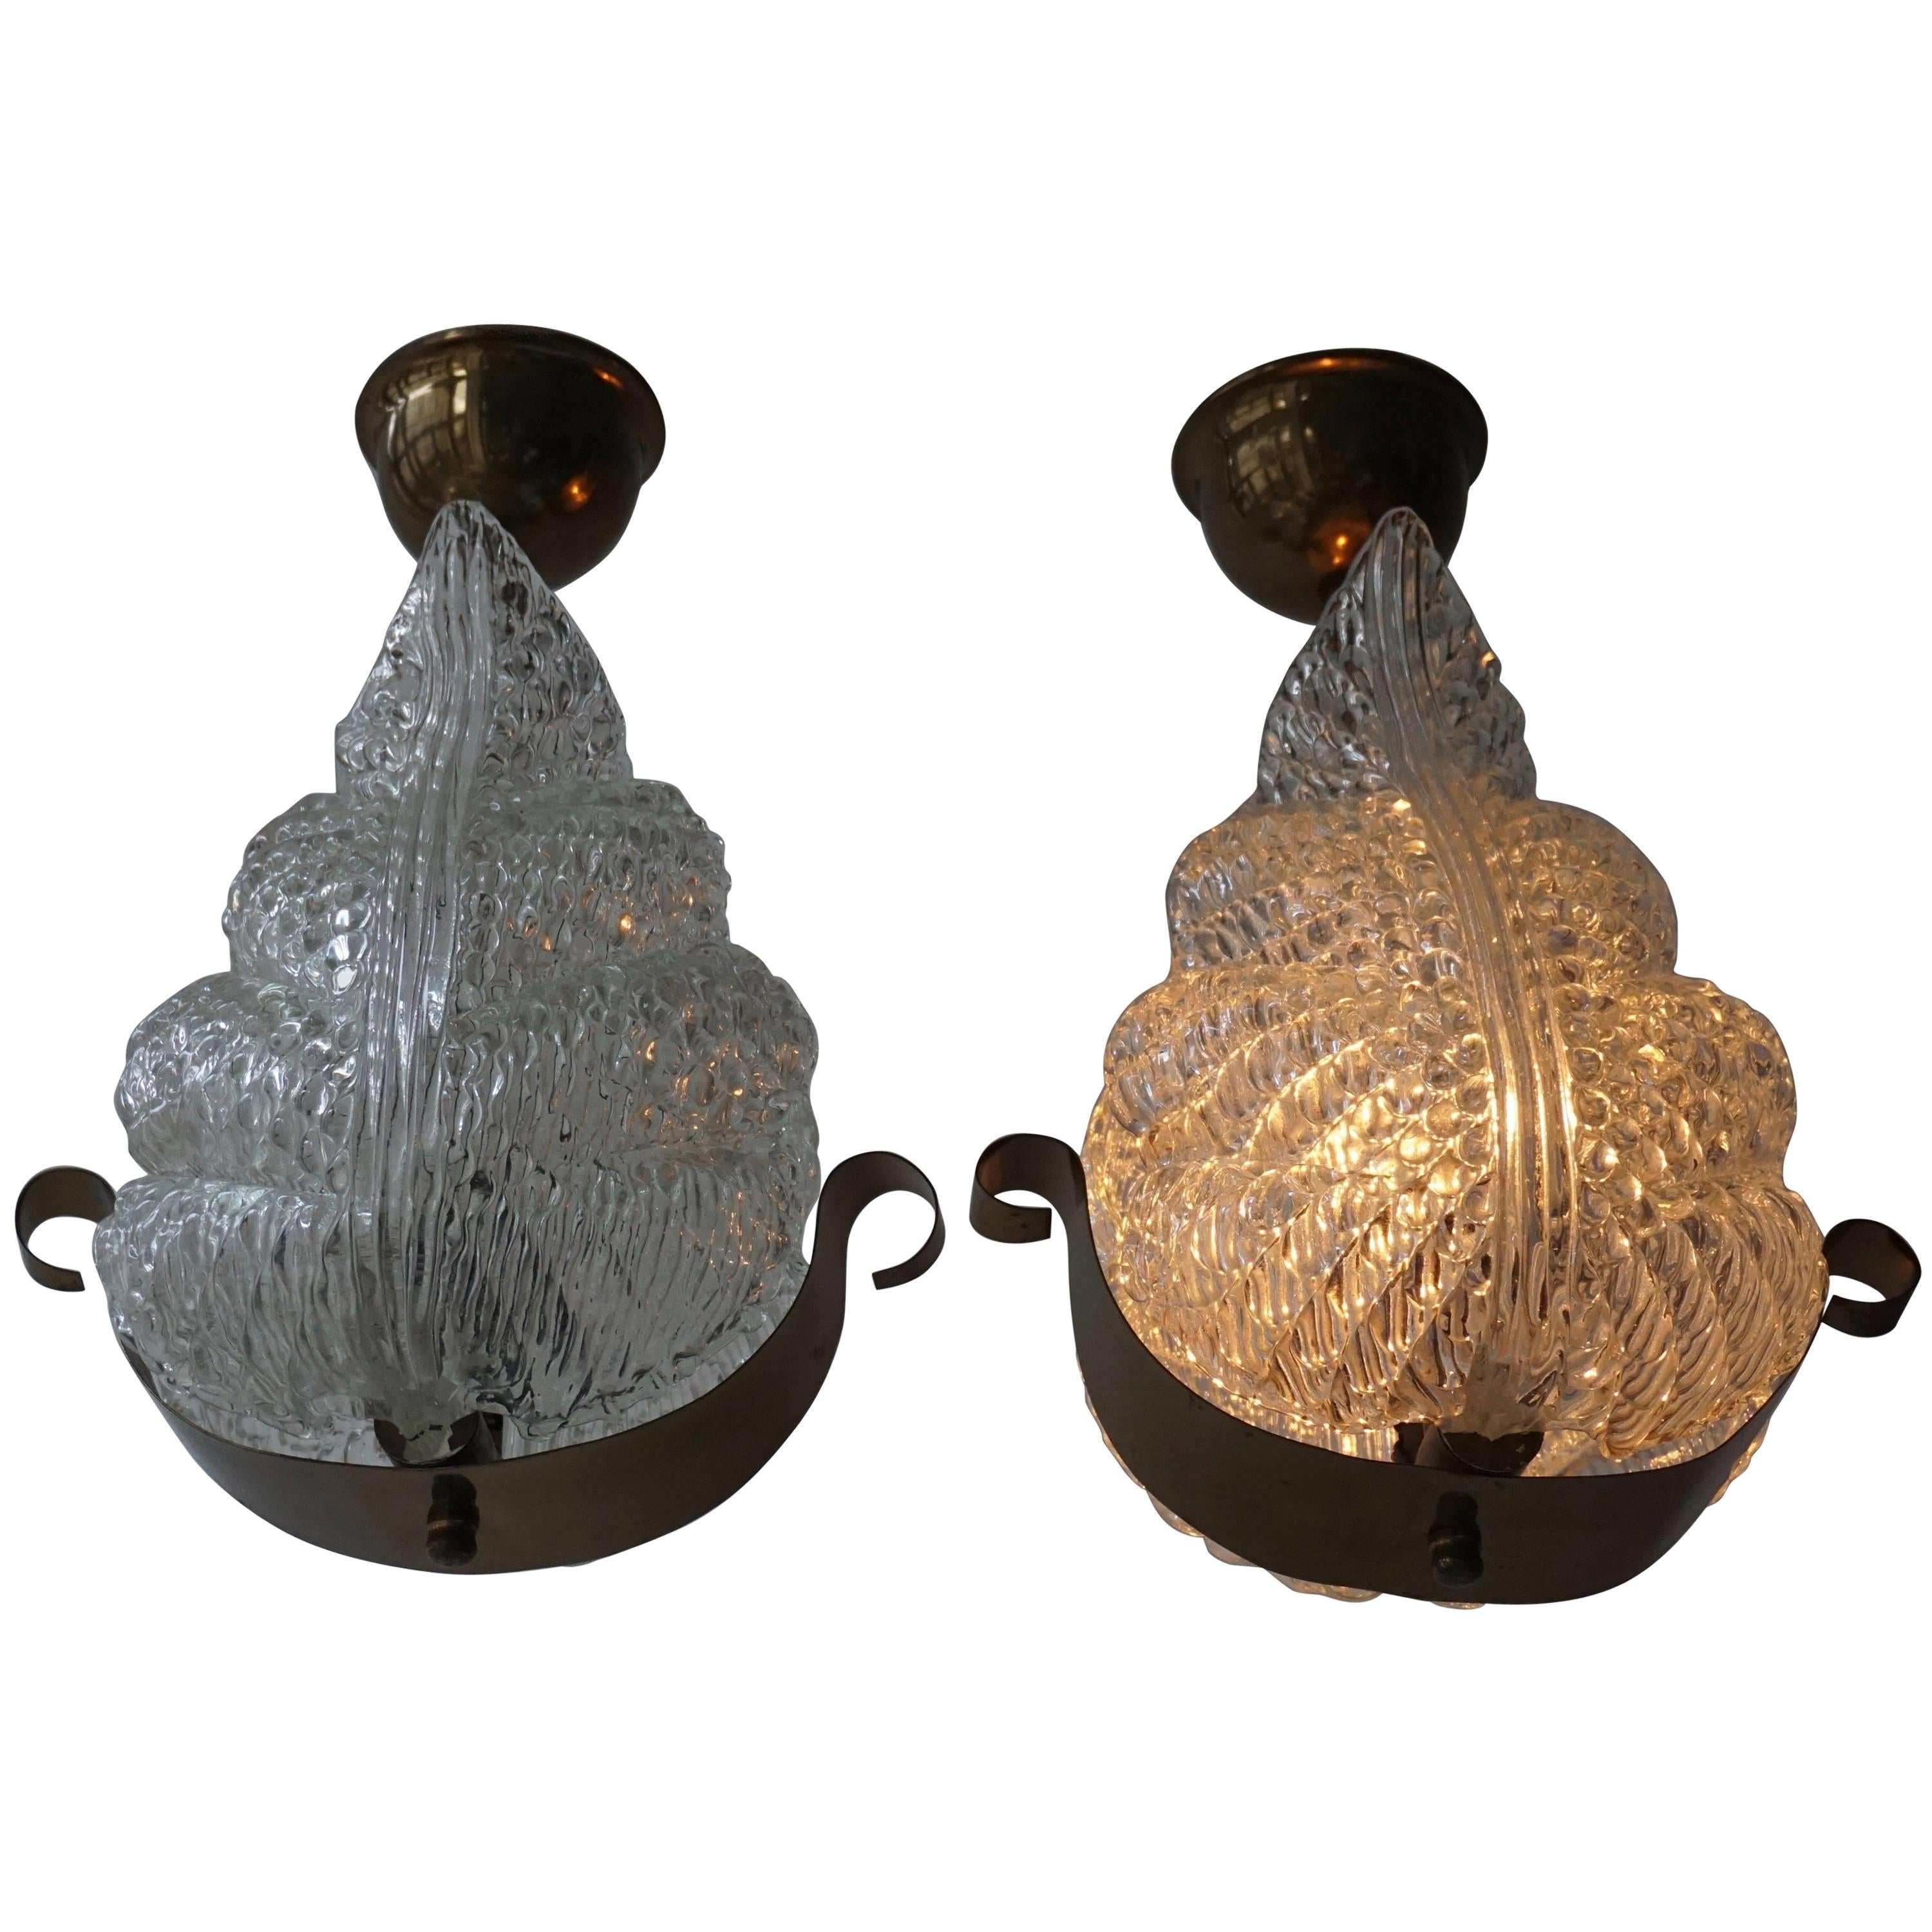 One Italian Brass and Murano Glass Pendant Light.